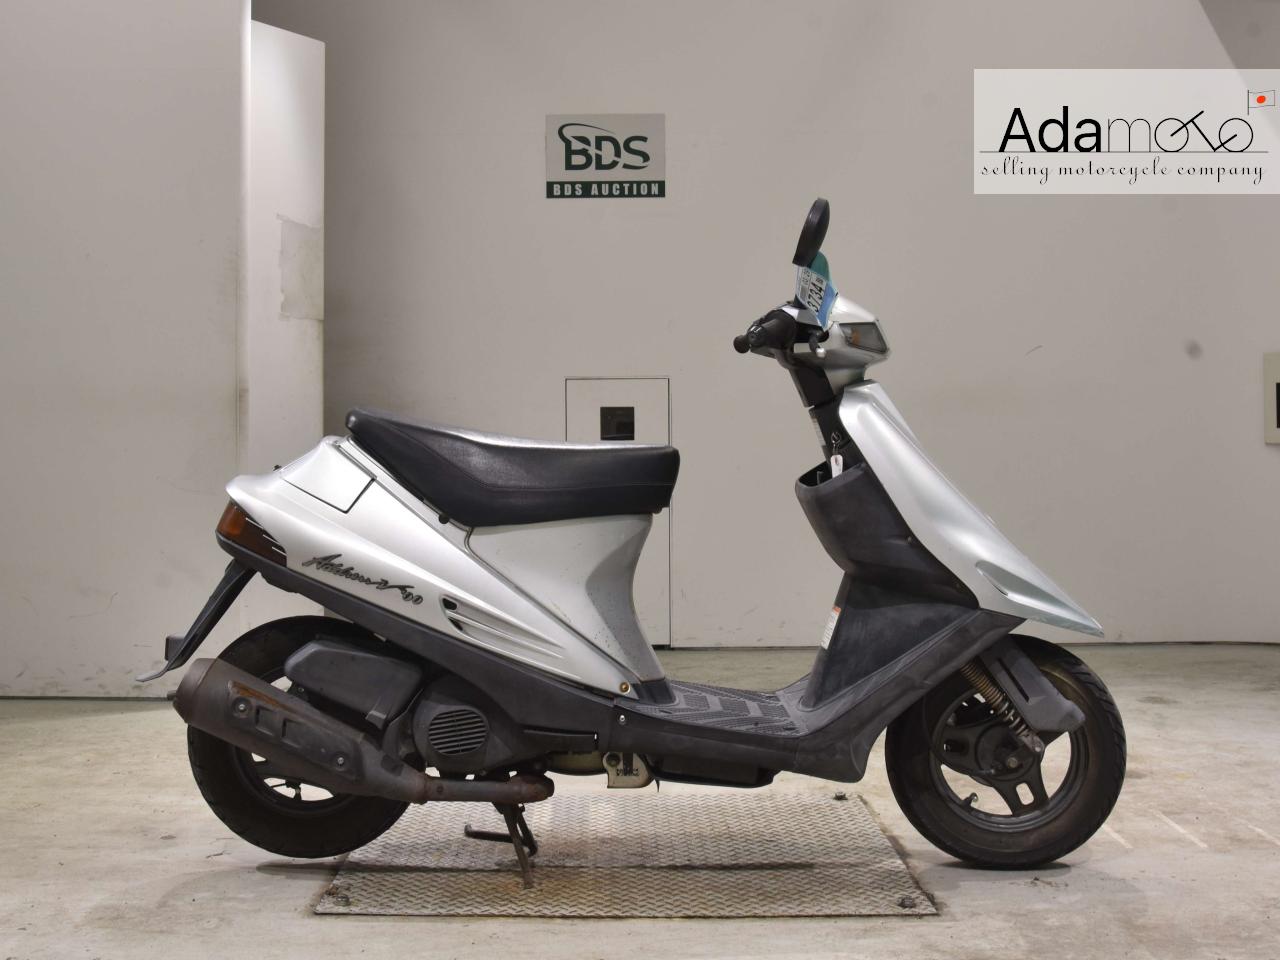 Suzuki ADDRESS V100 - Adamoto - Motorcycles from Japan